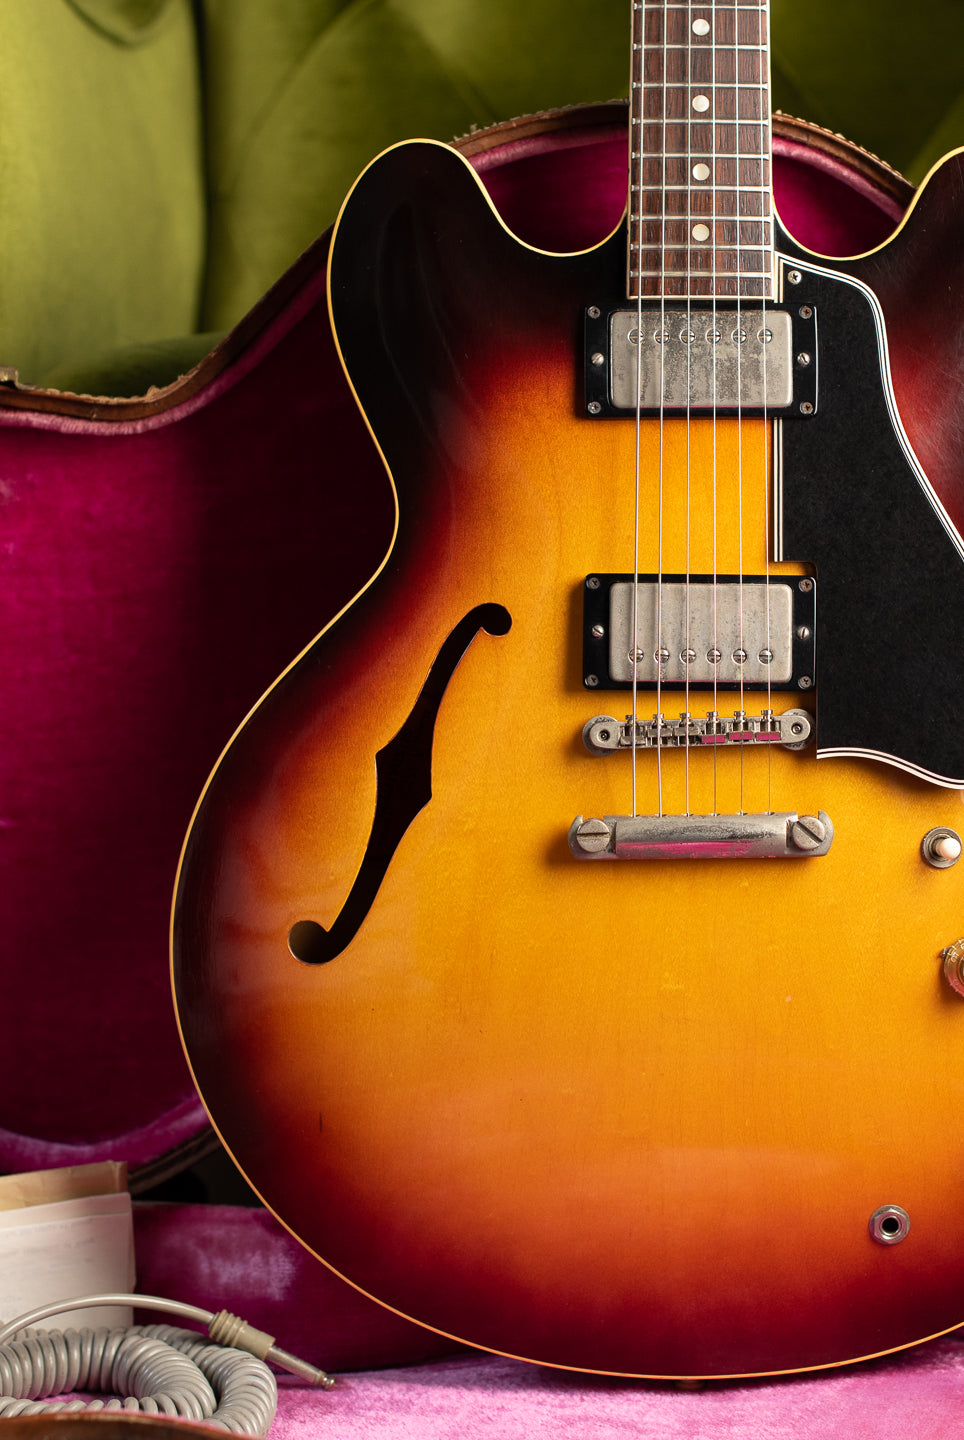 Vintage 1960 Gibson ES-335 electric guitar